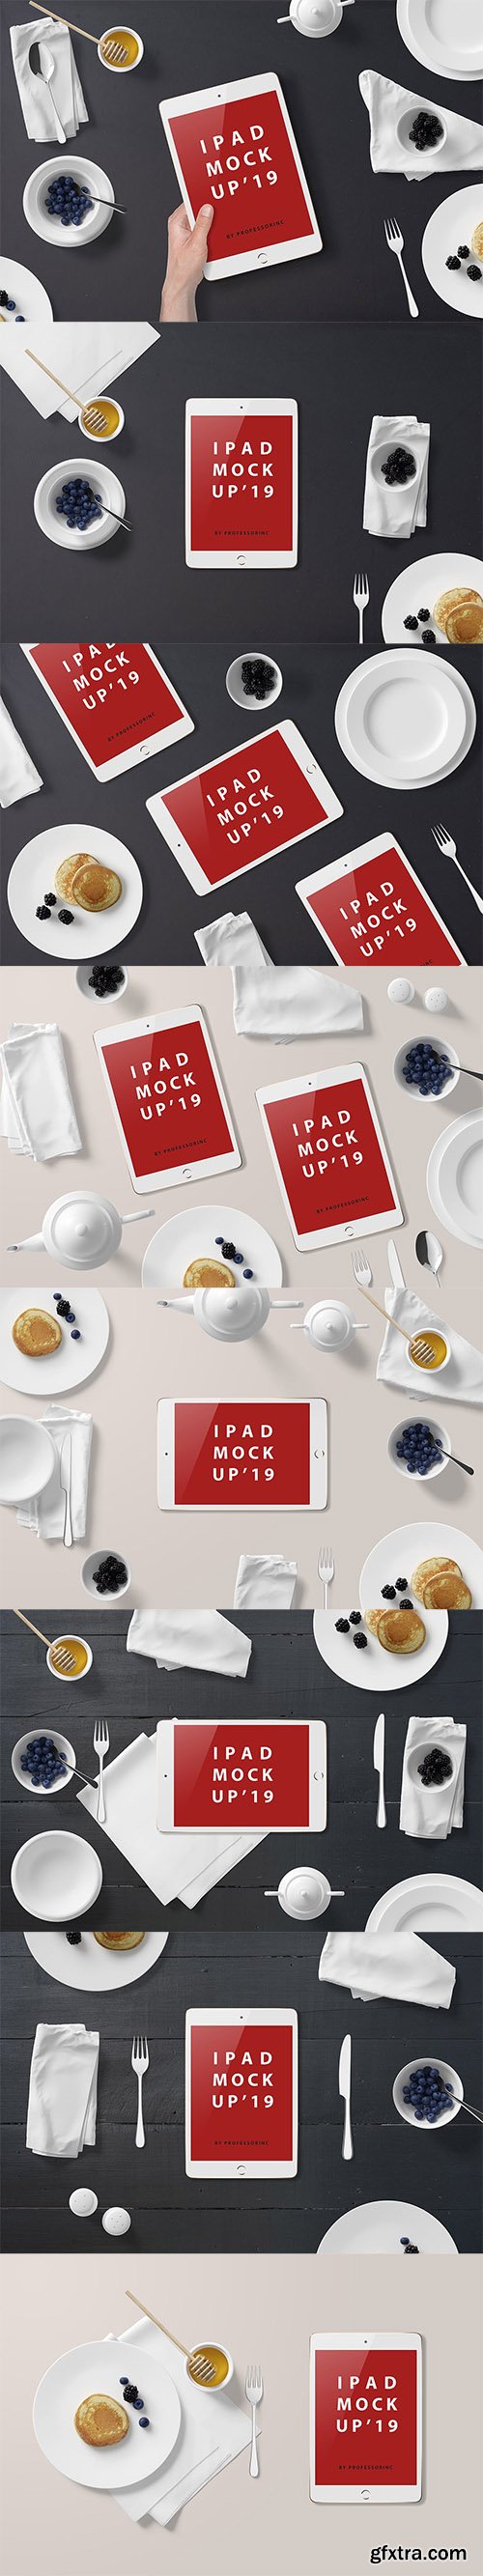 iPad Mini Mockup - Breakfast Set